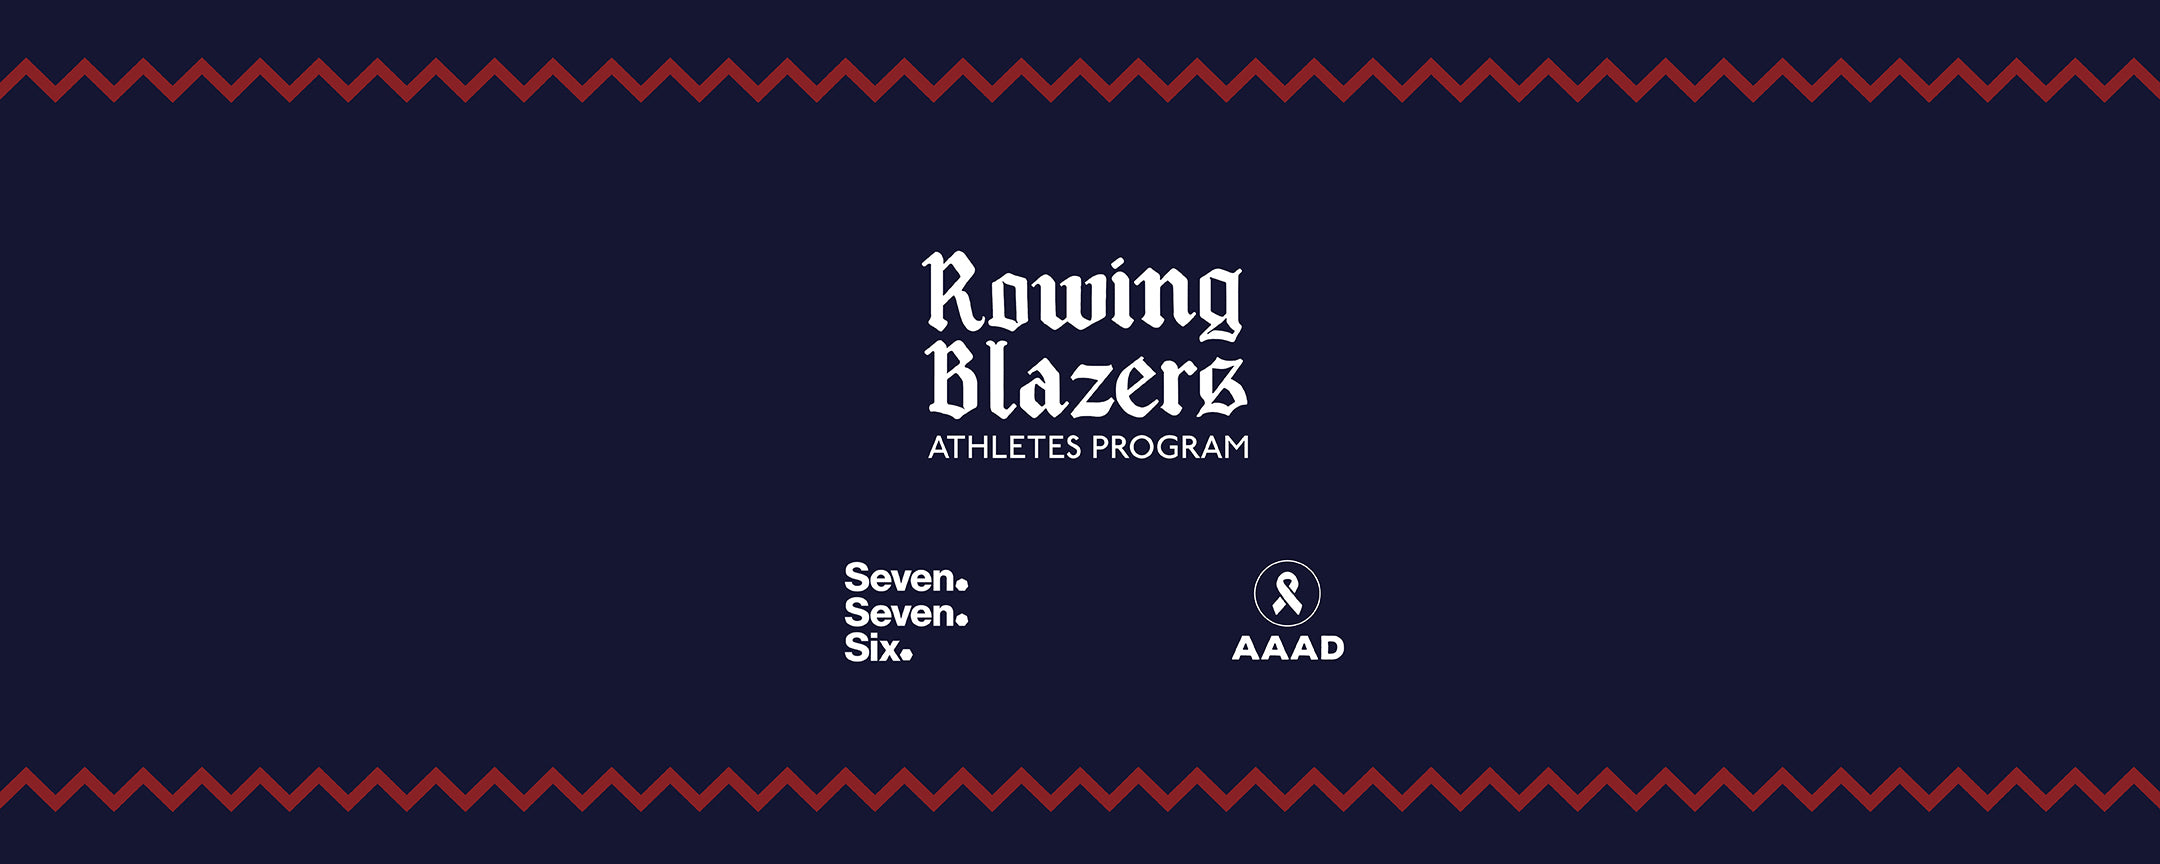 Rowing Blazers Athletes Program